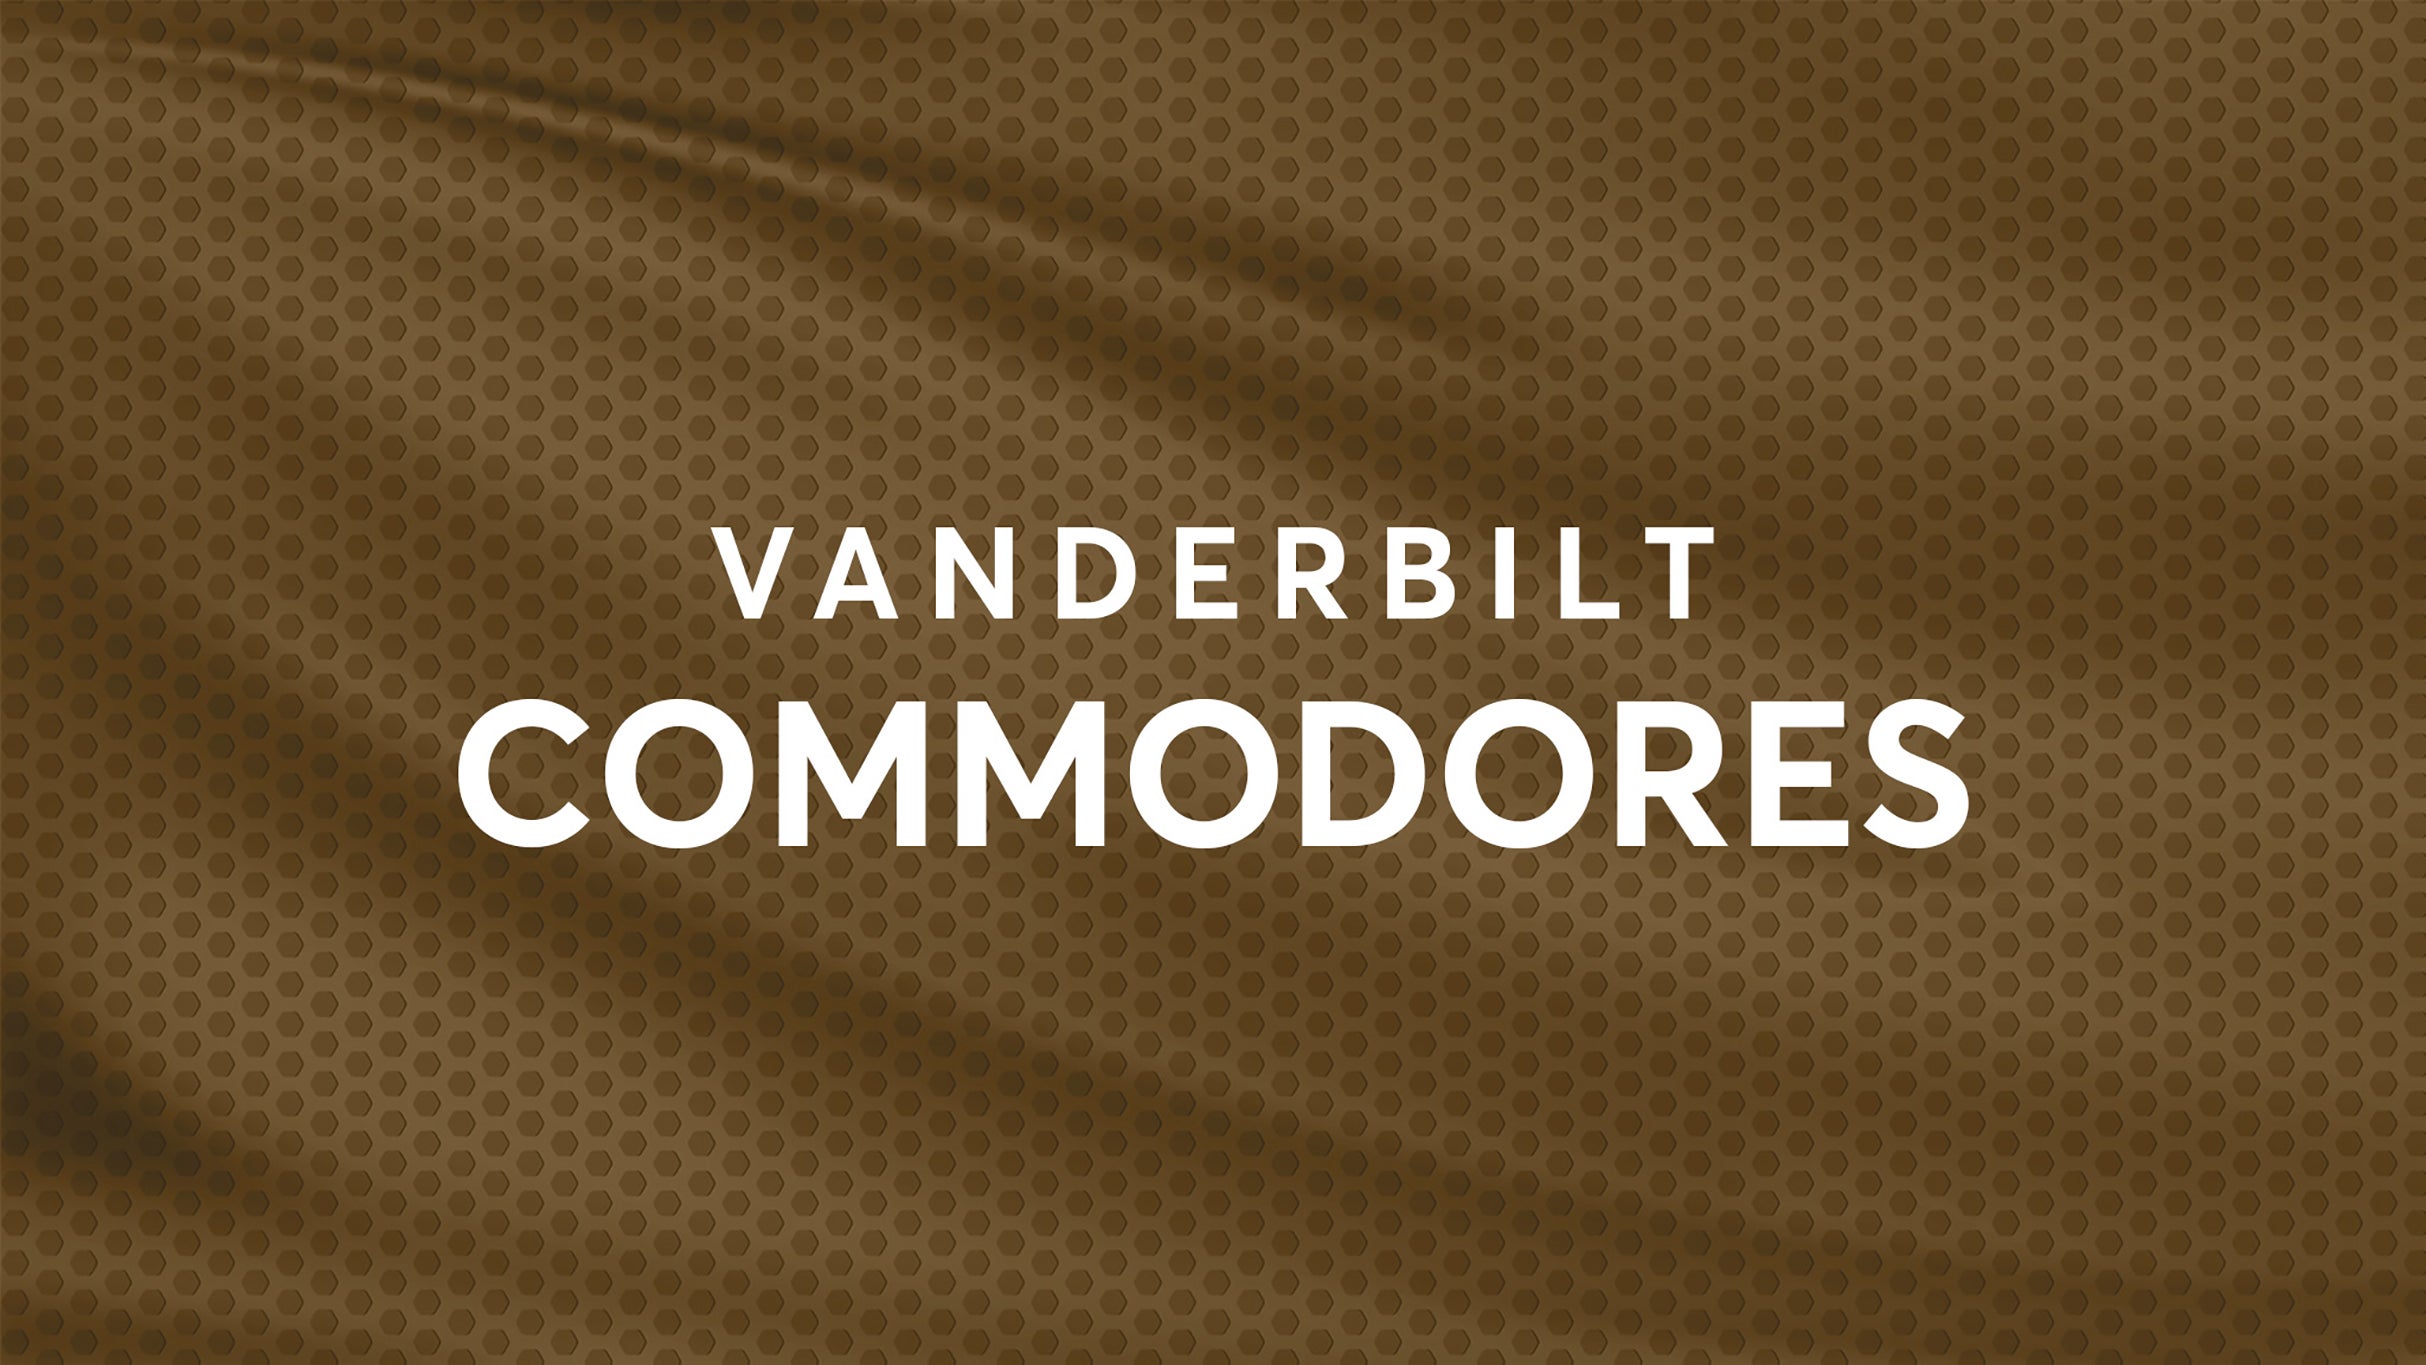 Vanderbilt Commodores Football vs. Virginia Tech Hokies Football hero